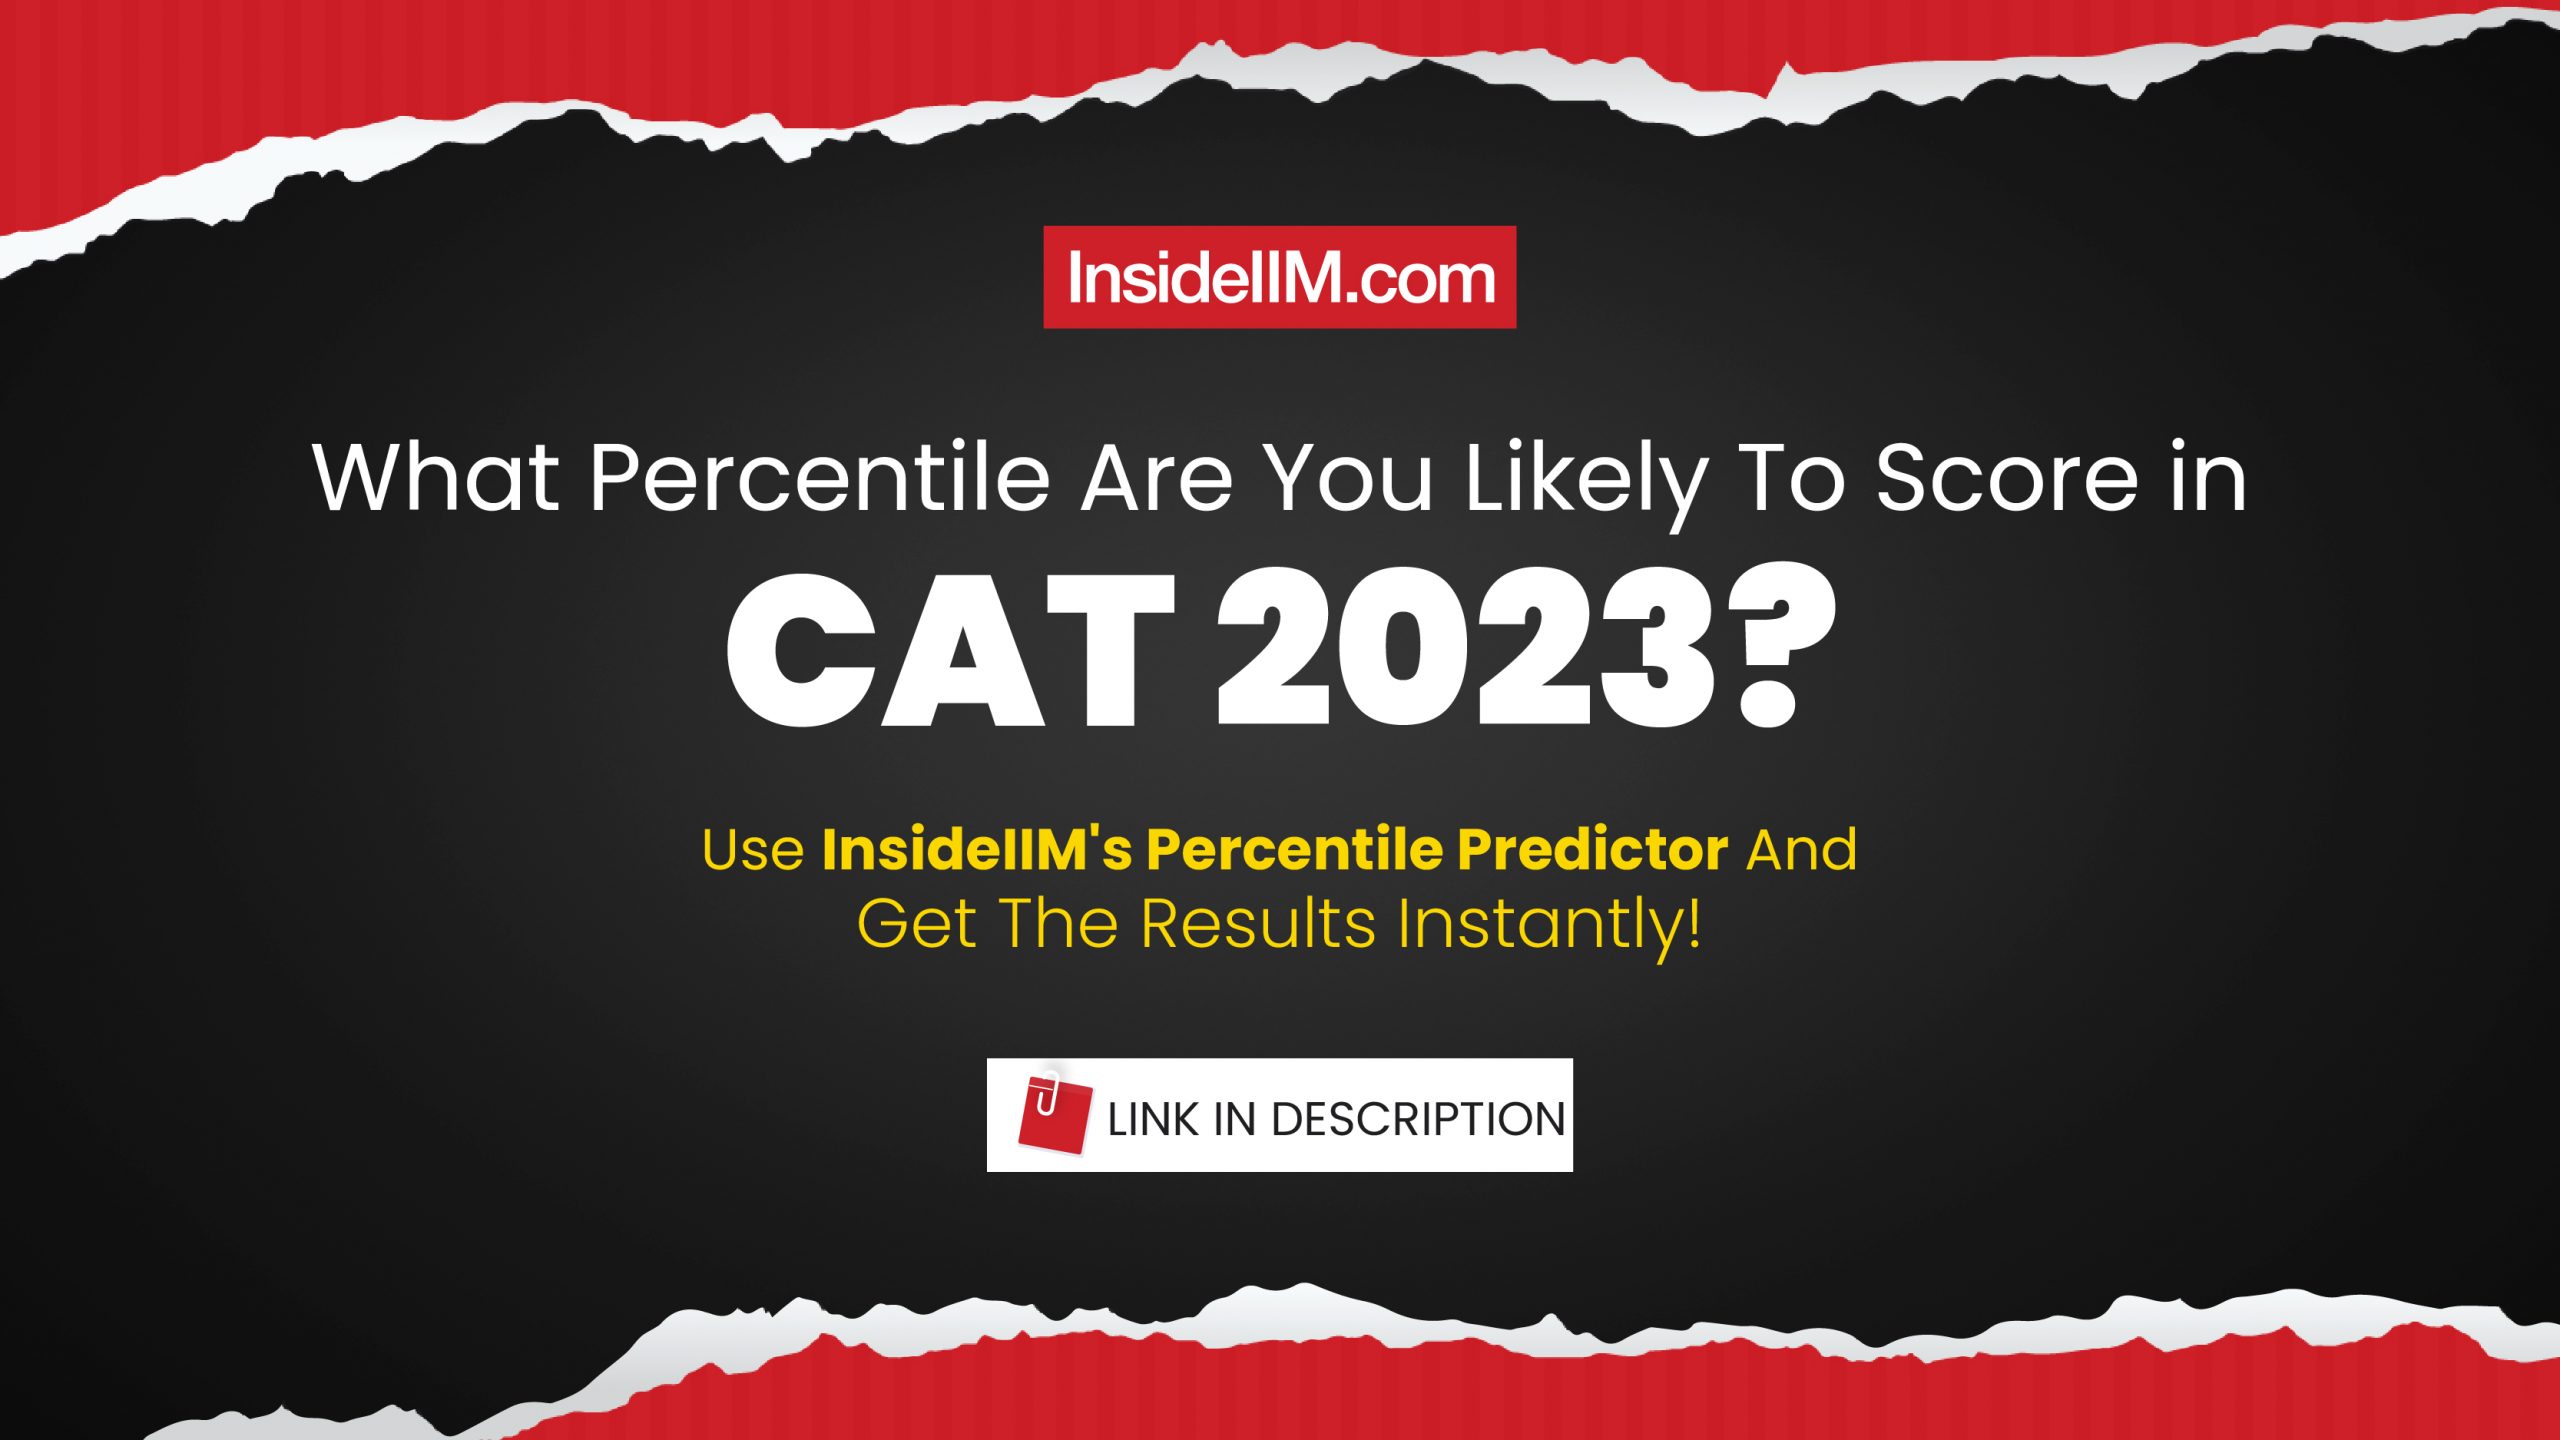 CAT 2023 Percentile Predictor - Check Your CAT 2023 Expected Percentile Here! (Quiz Ad)